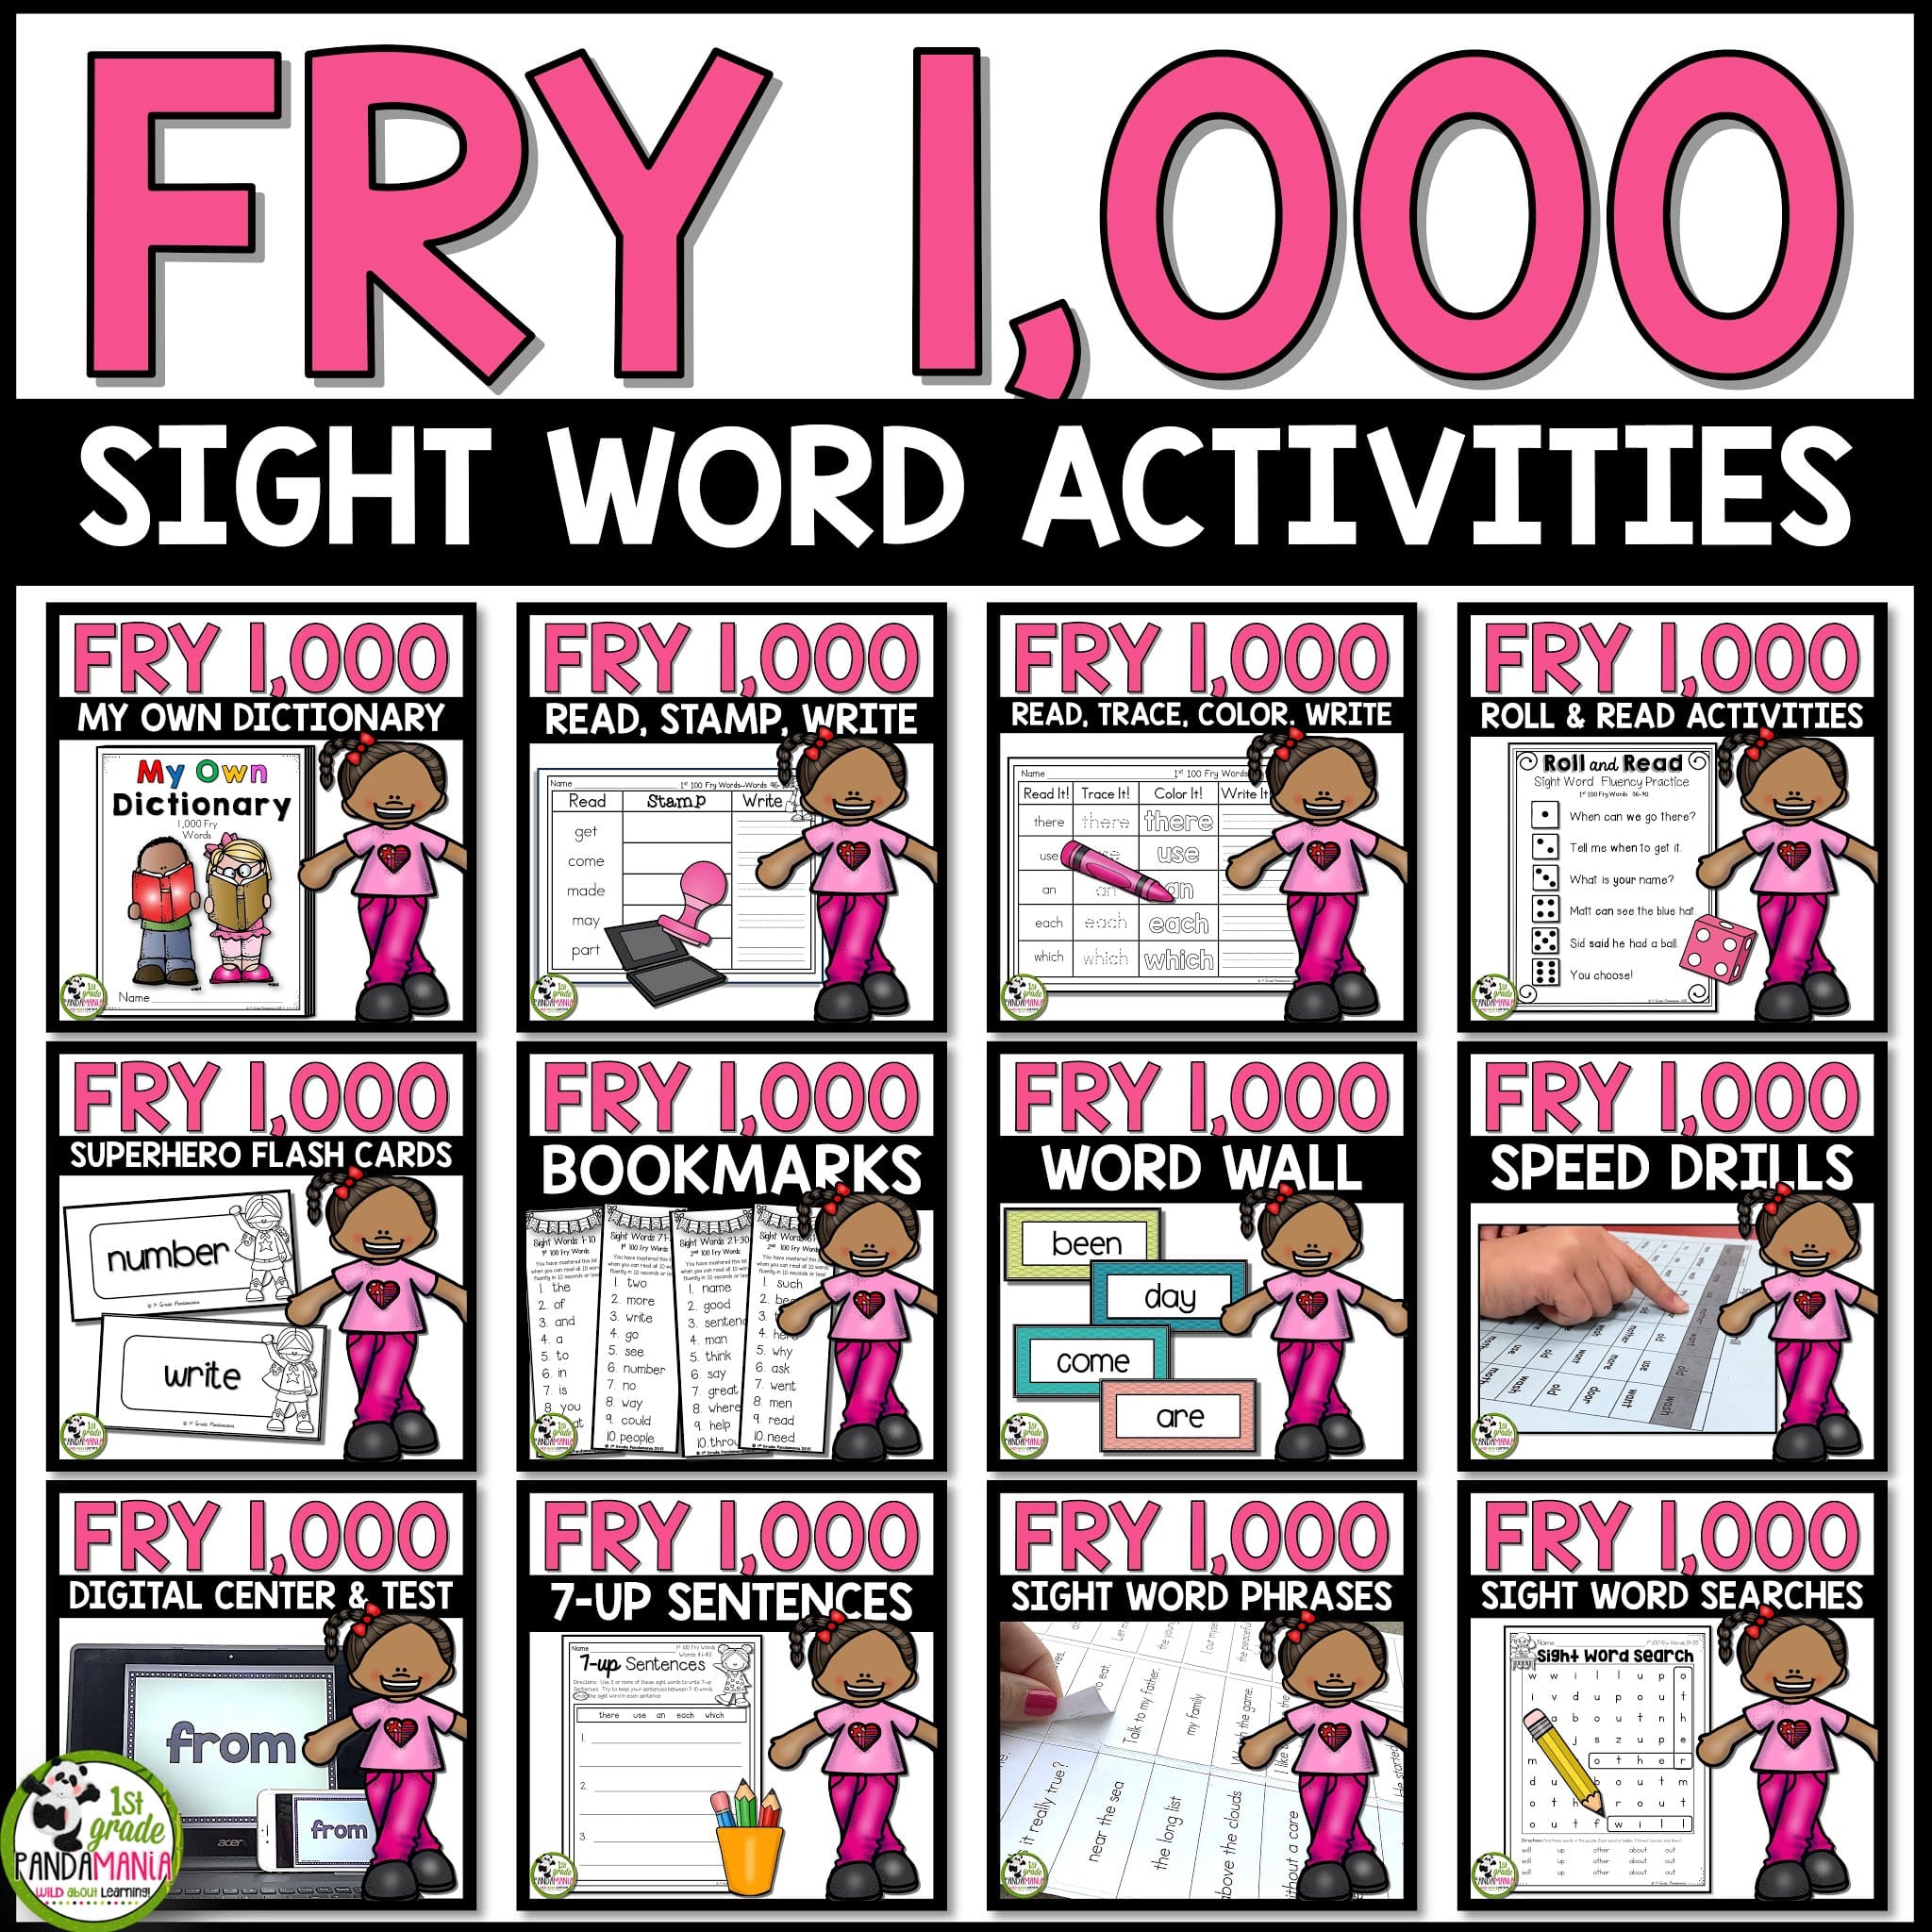 16 Helpful Ways to Build Sight Word SMARTS 18